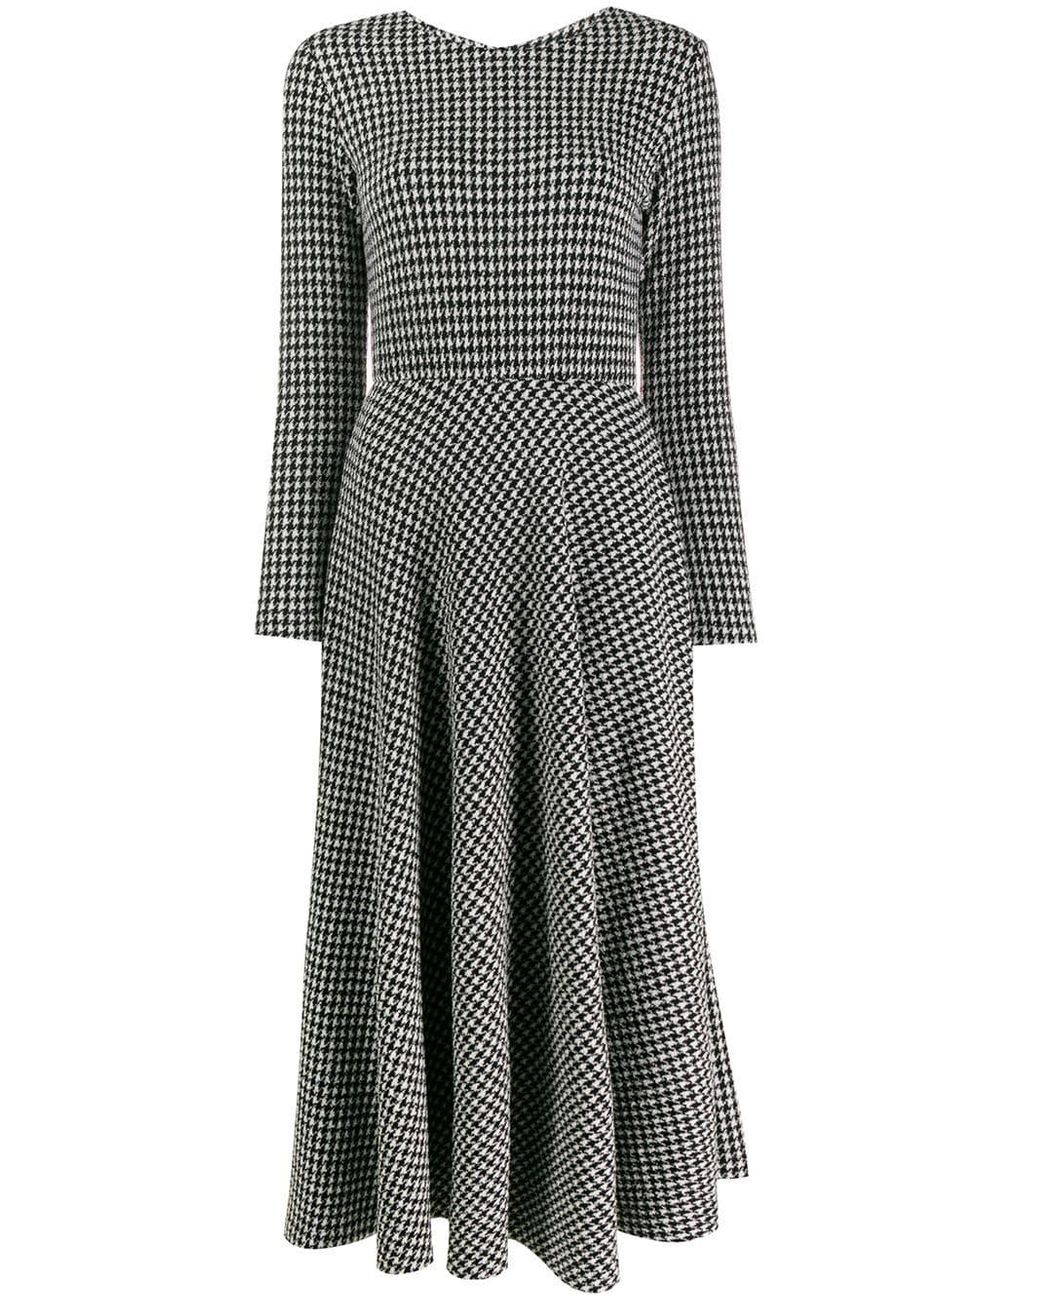 Harris Wharf London Wool Houndstooth Patterned Dress in Black - Lyst